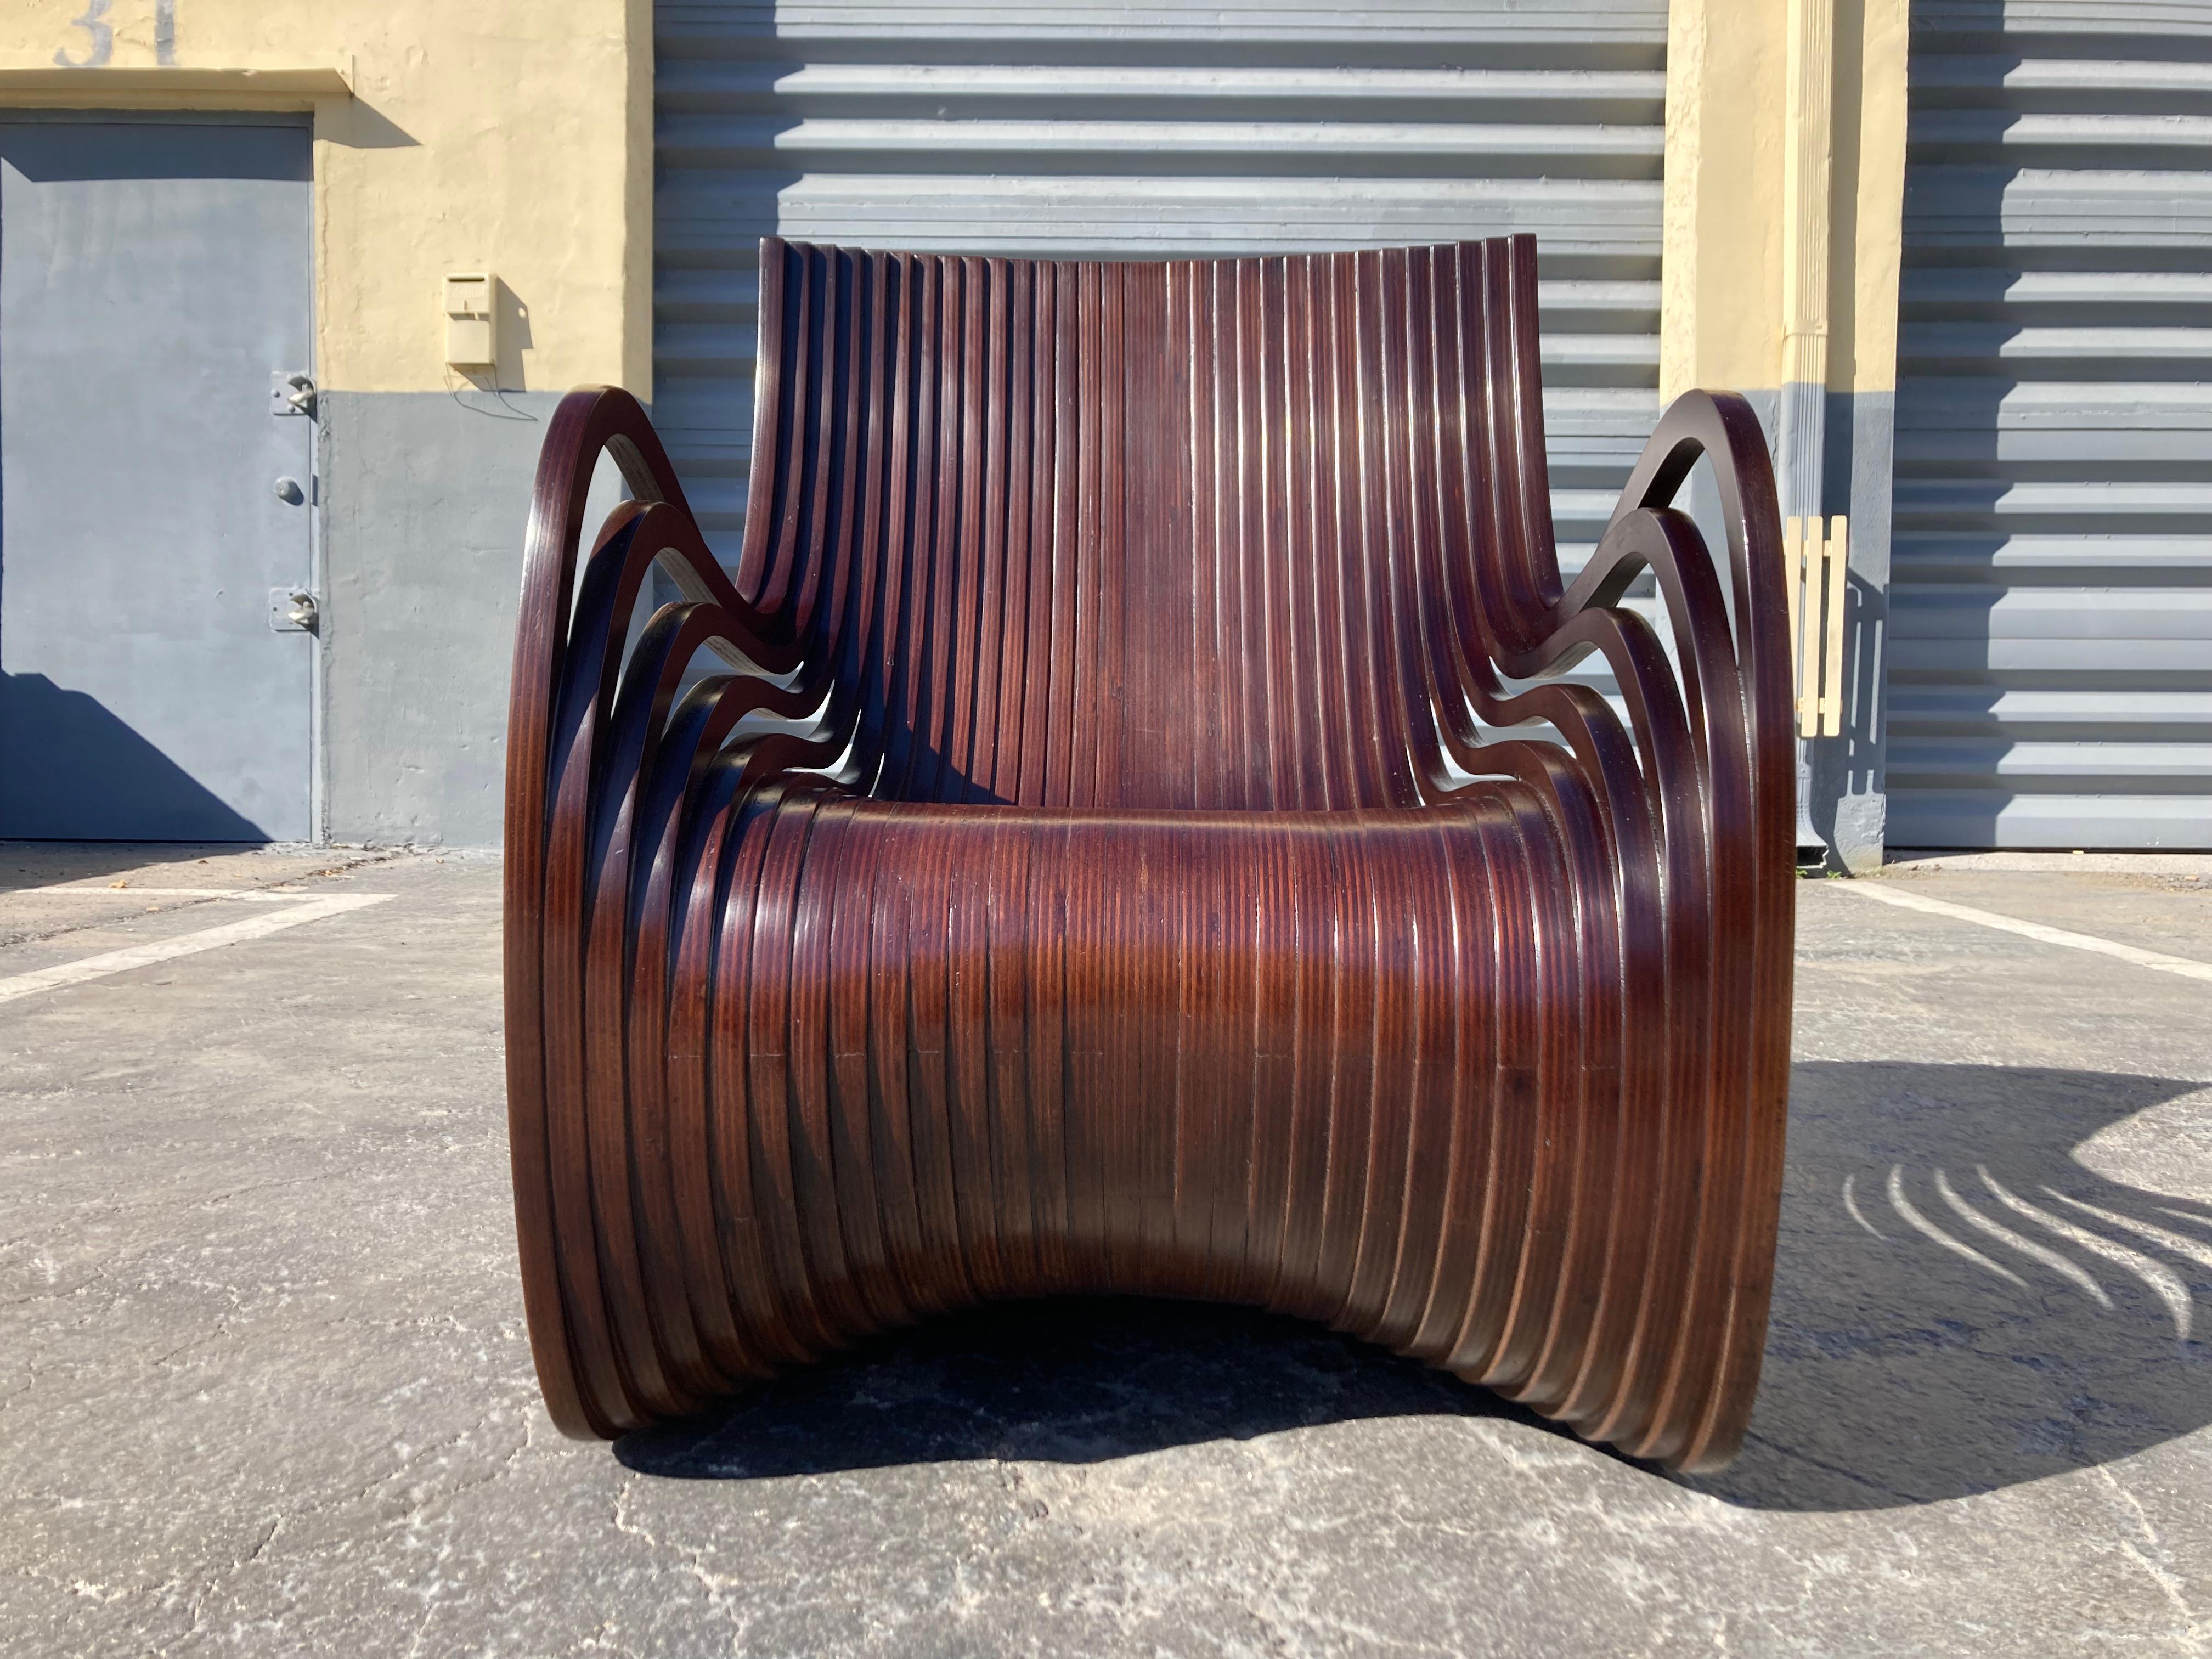 Pipo Lounge chair by Piegatto in dark walnut finish.